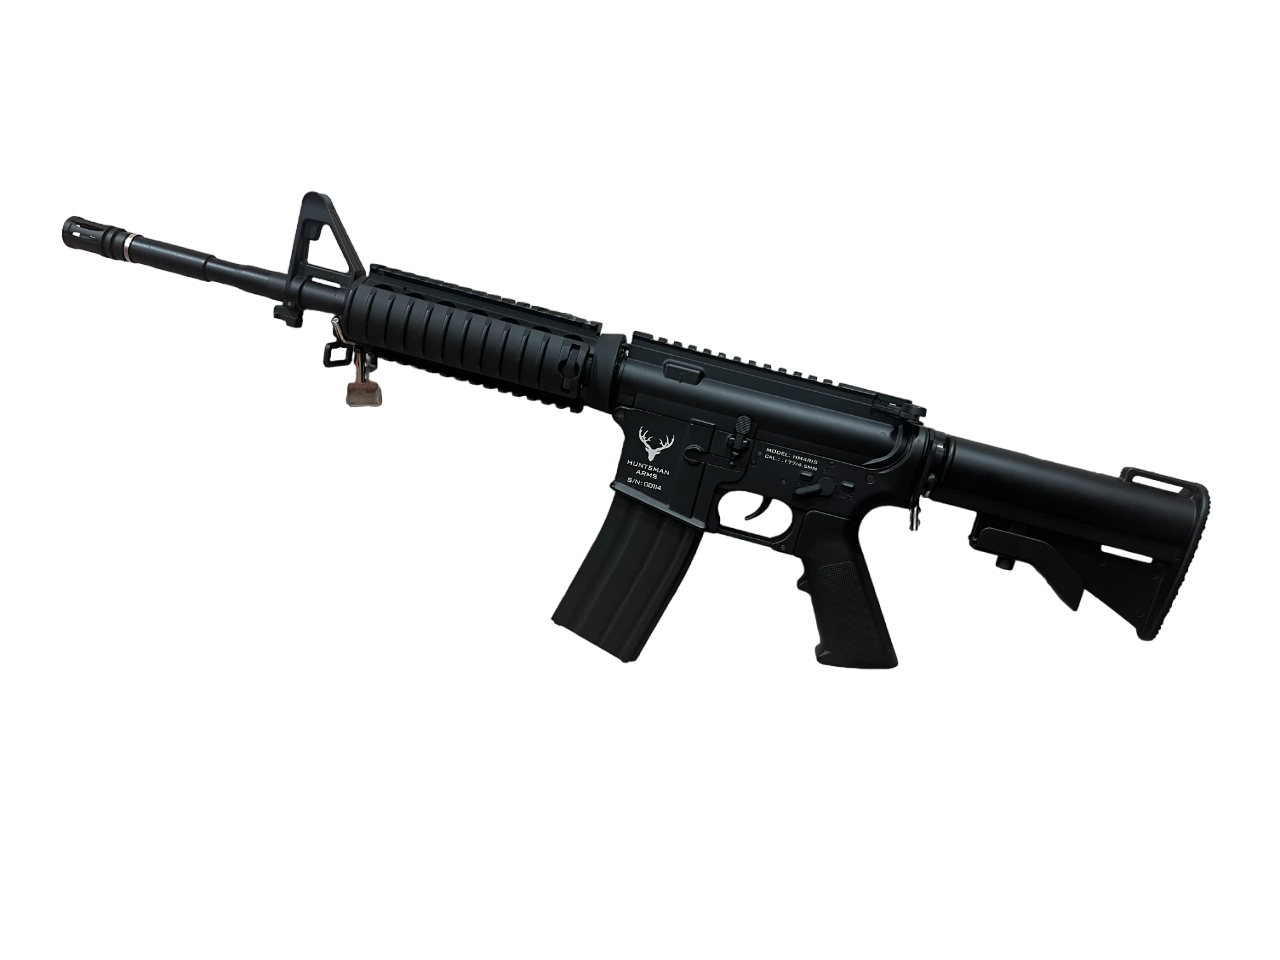 Huntsman Arms .177/4.5mm M4 RIS Tactical Rifle (Co2 Powered – Black)